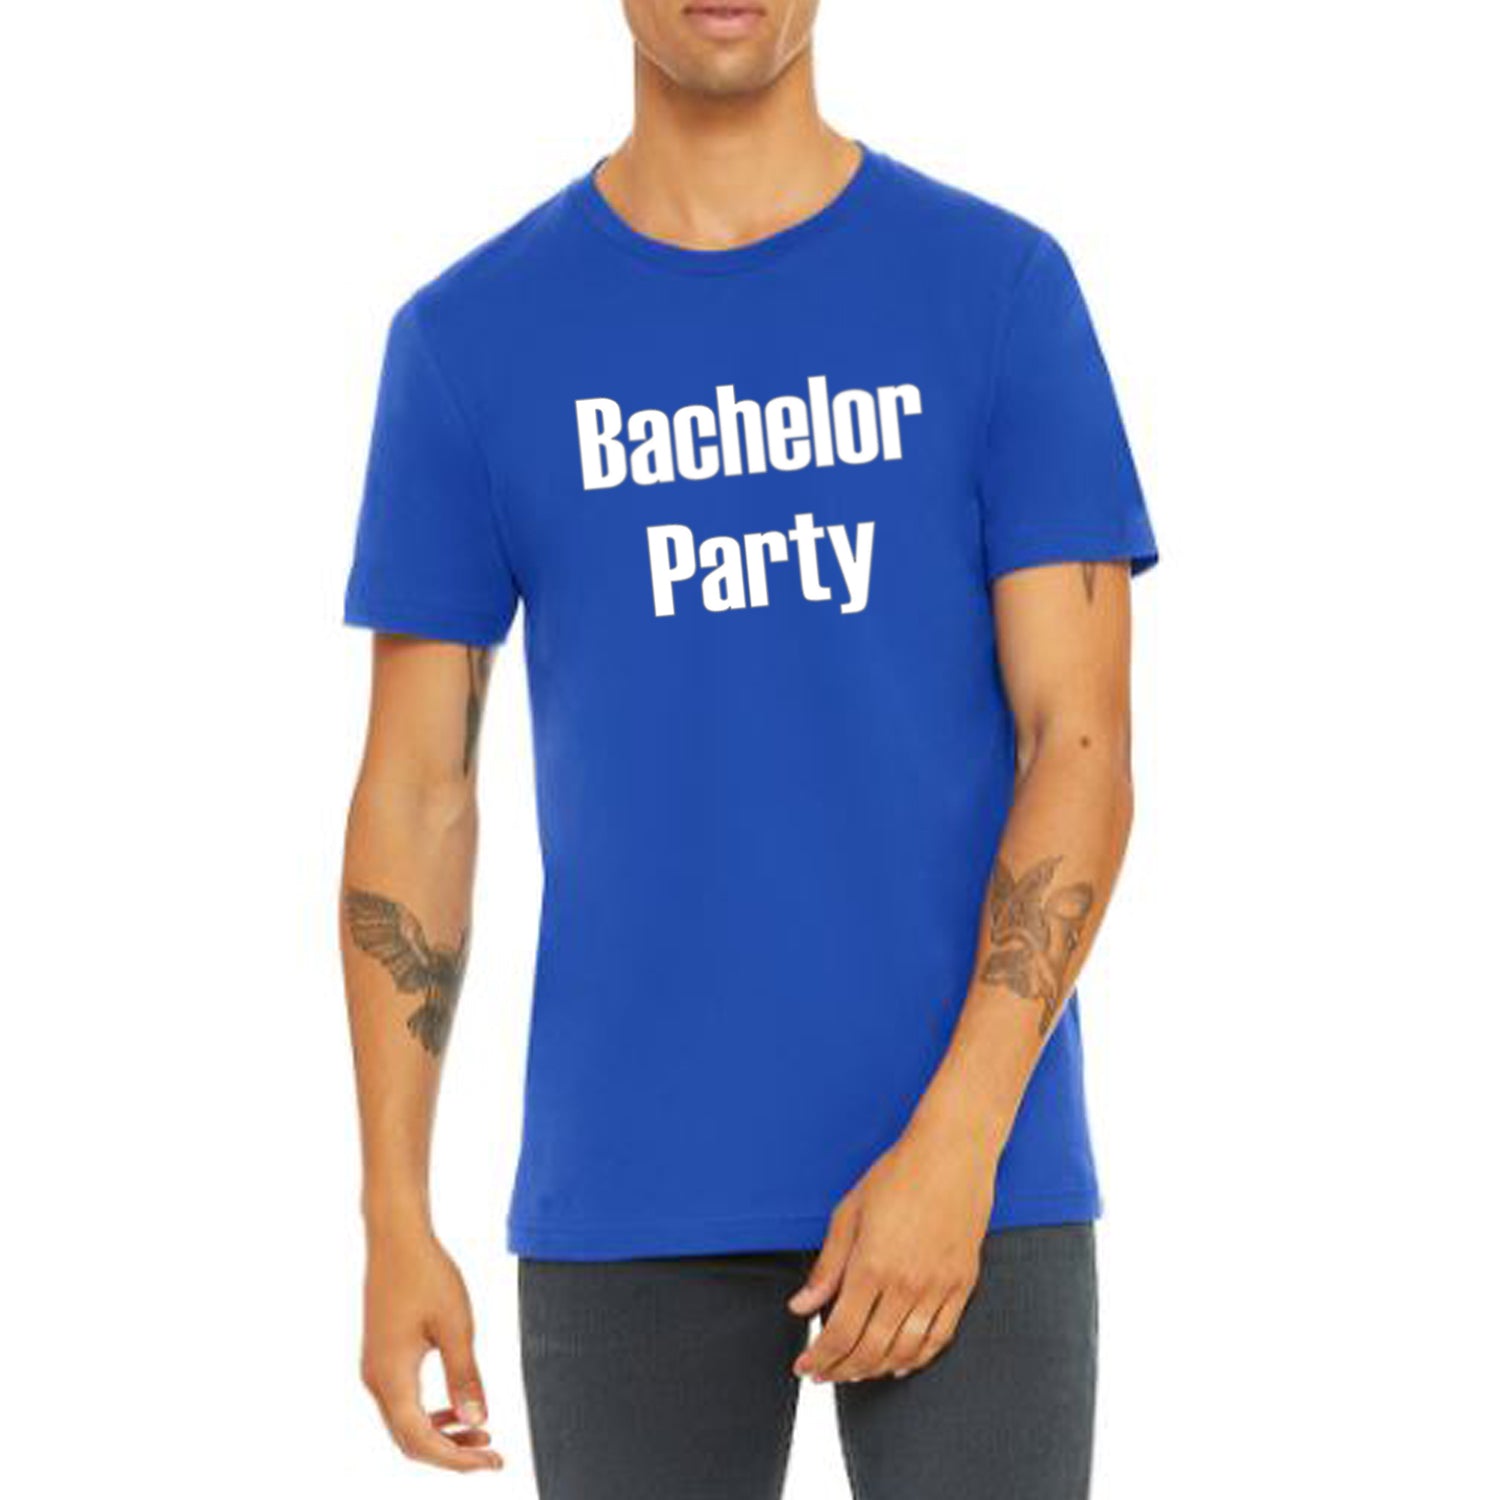 Bachelor Party Groom and Groomsmen T-Shirts, Crewneck, Bachelor Party Shirts, Groomens Shirts, Groomsmen Tees - Royal Blue T-Shirt